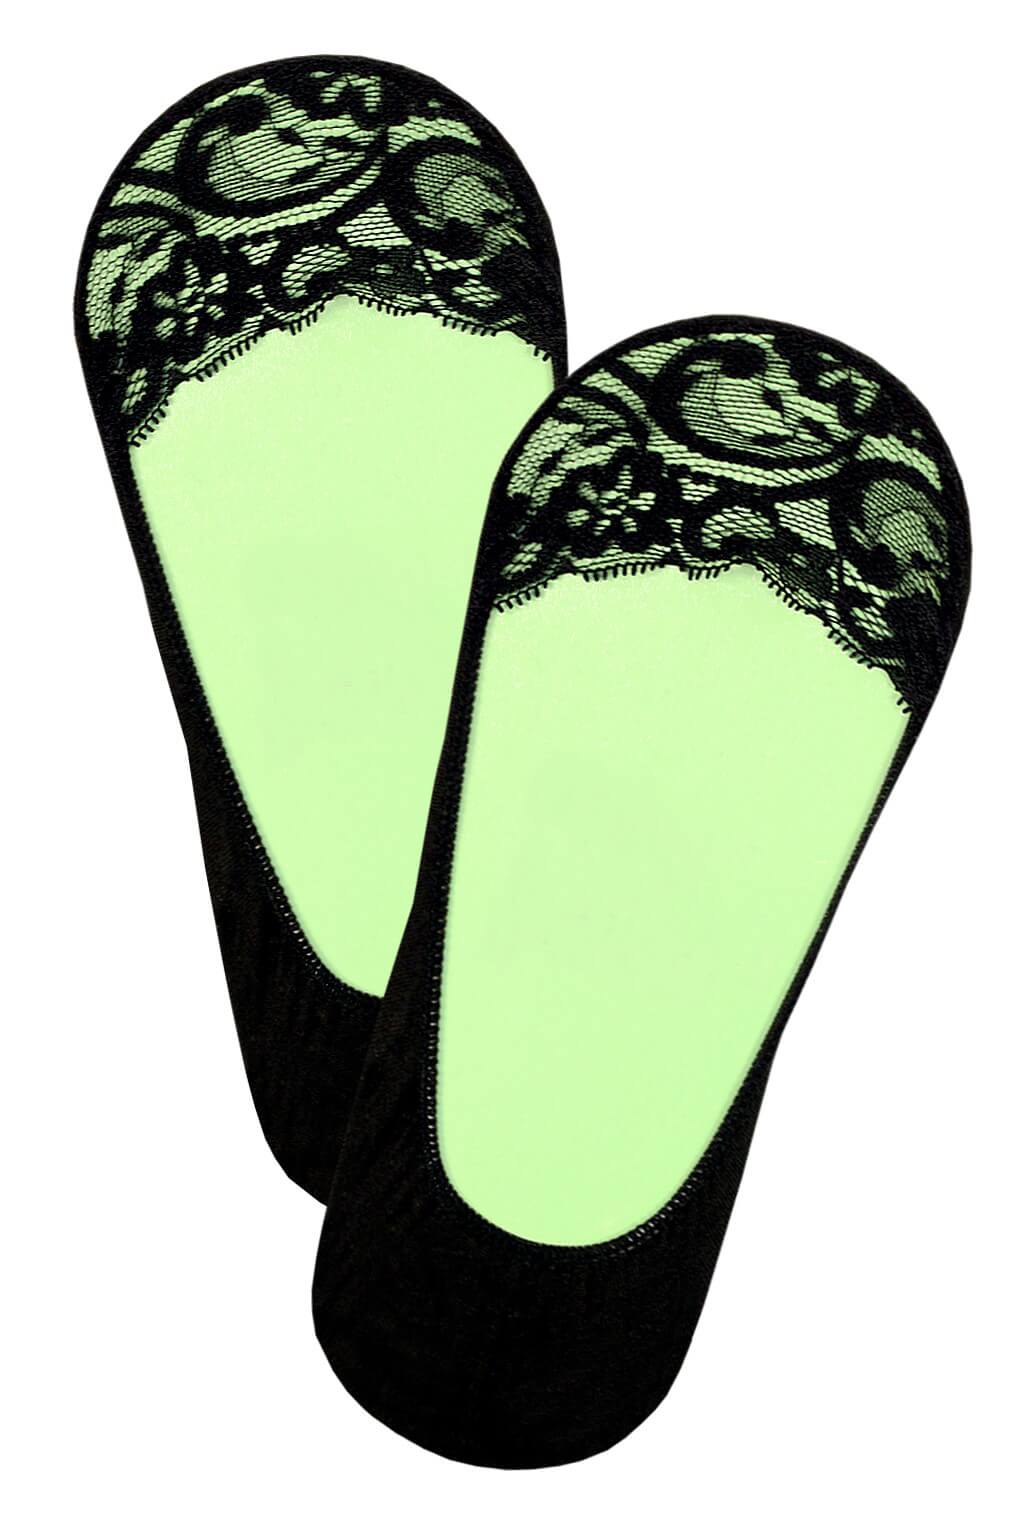 Krajkové skryté ponožky do balerínek WS911 - 2ks 35-38 černá